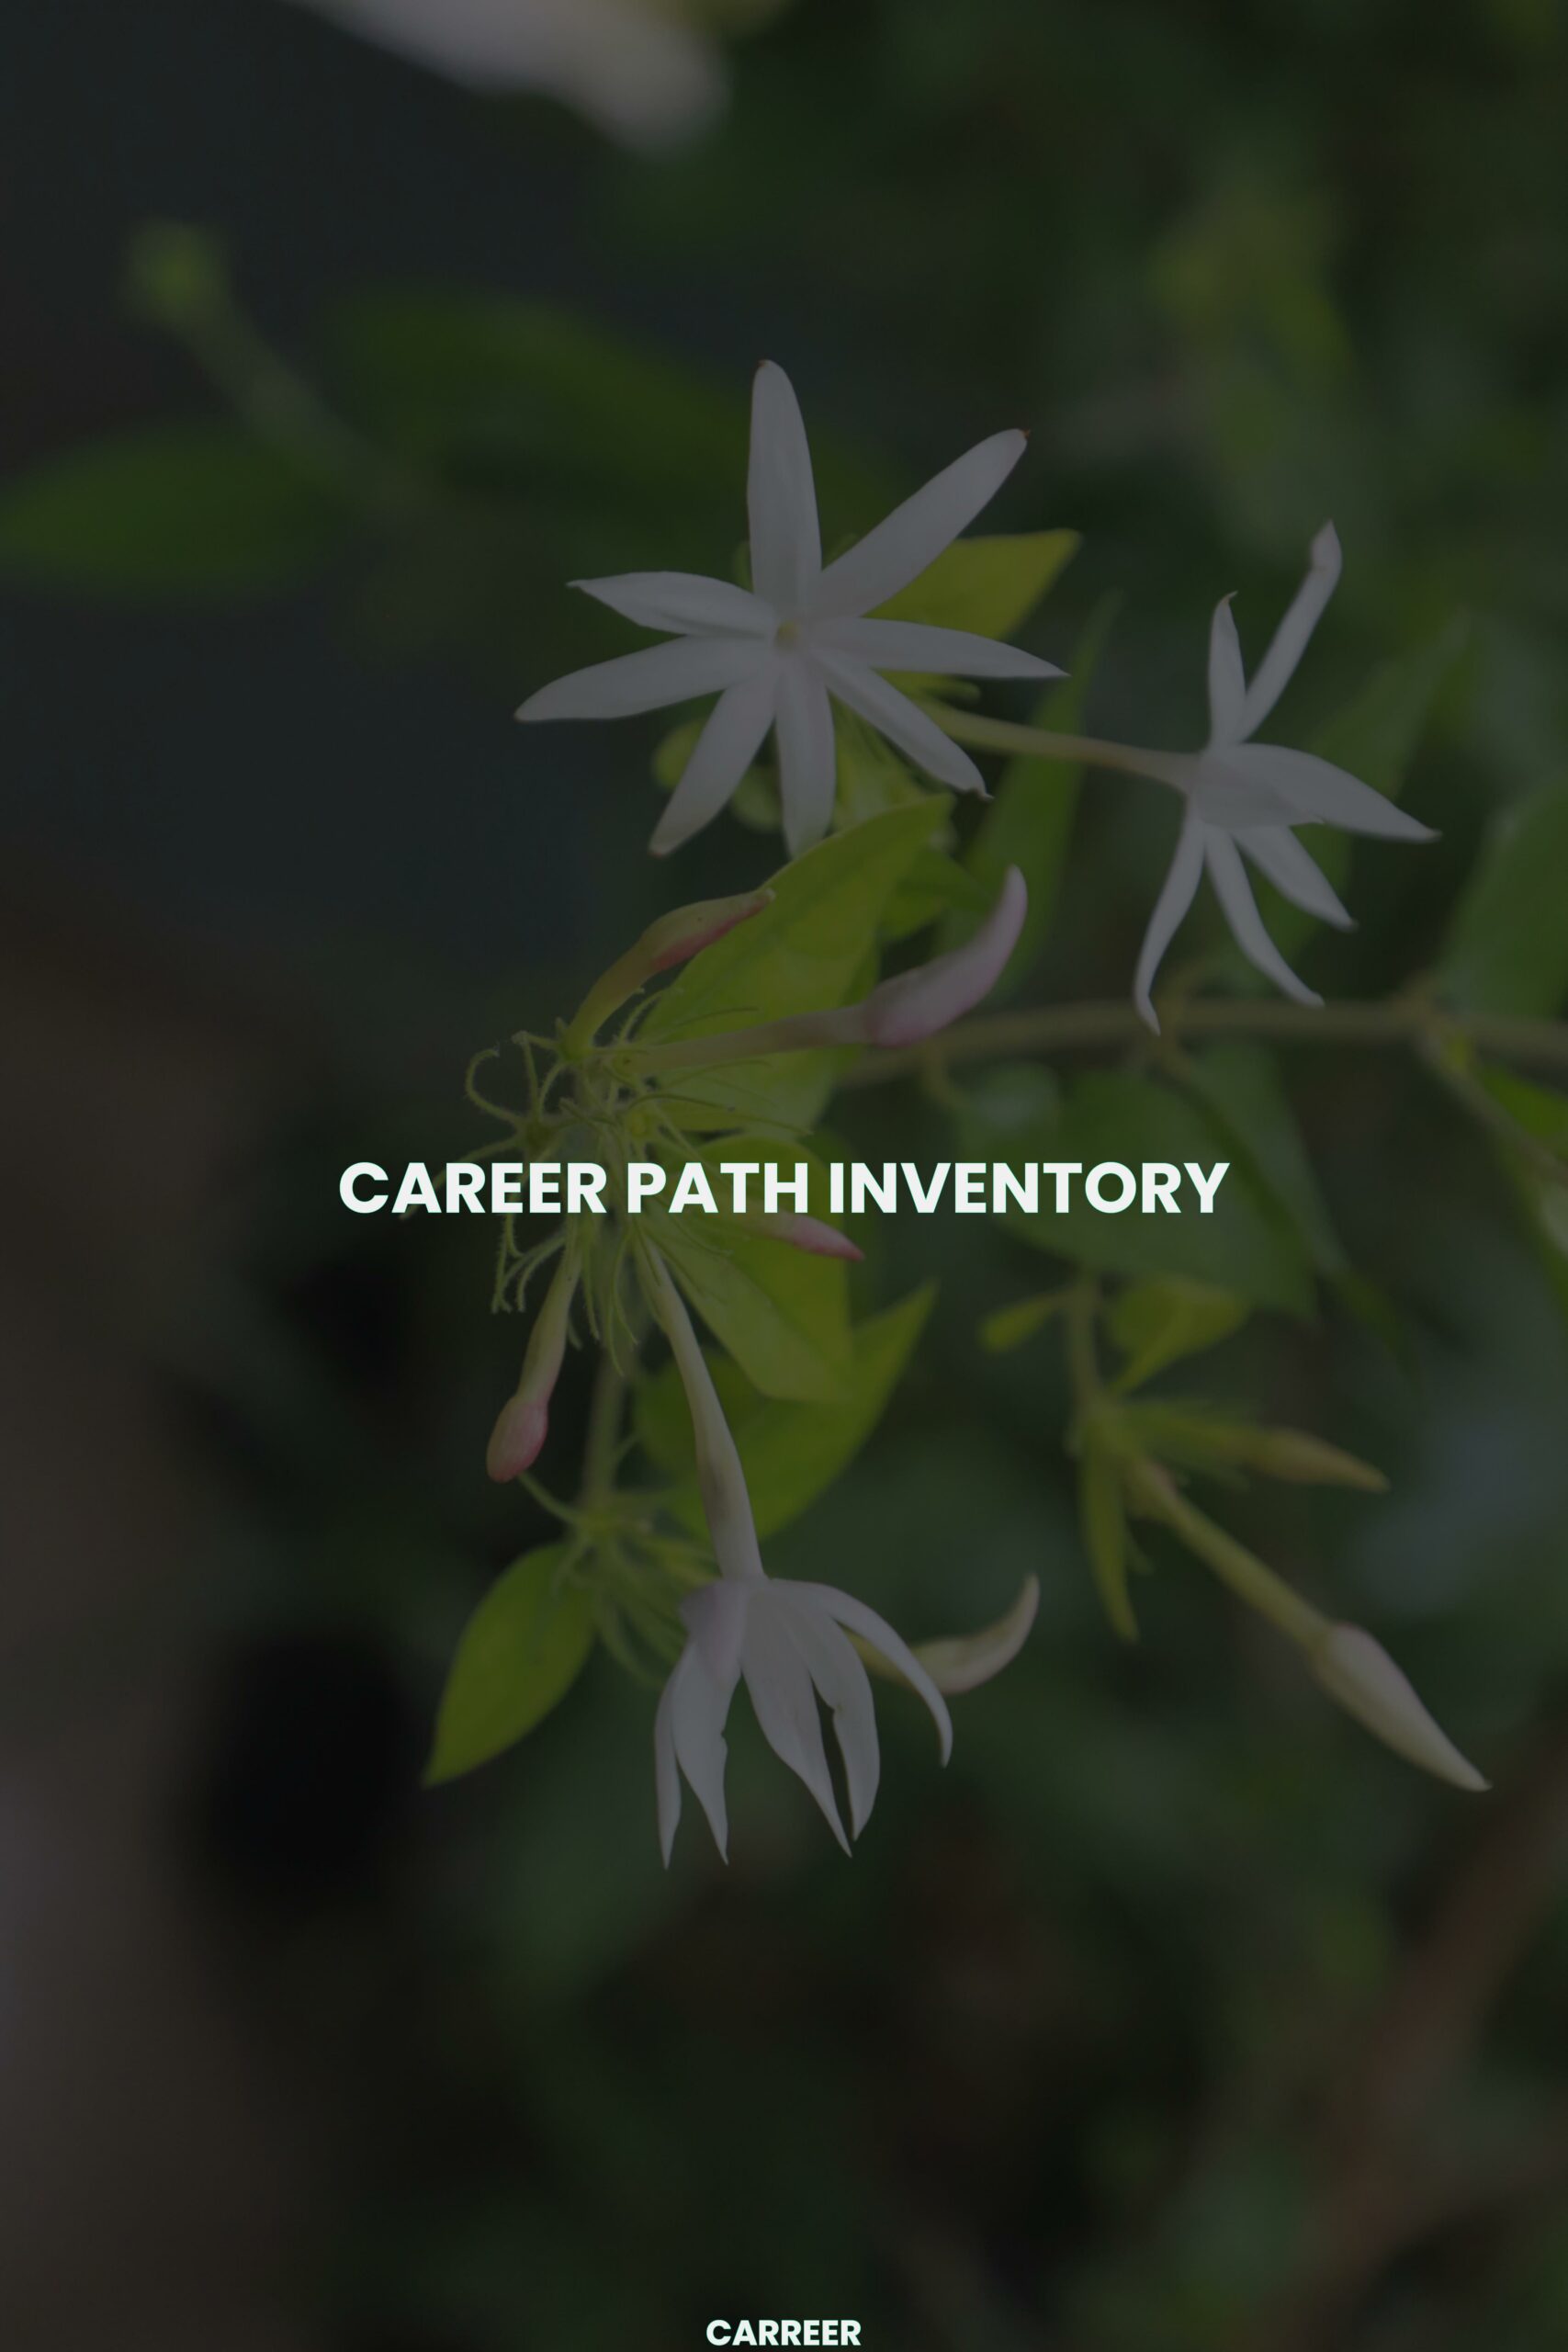 Career path inventory